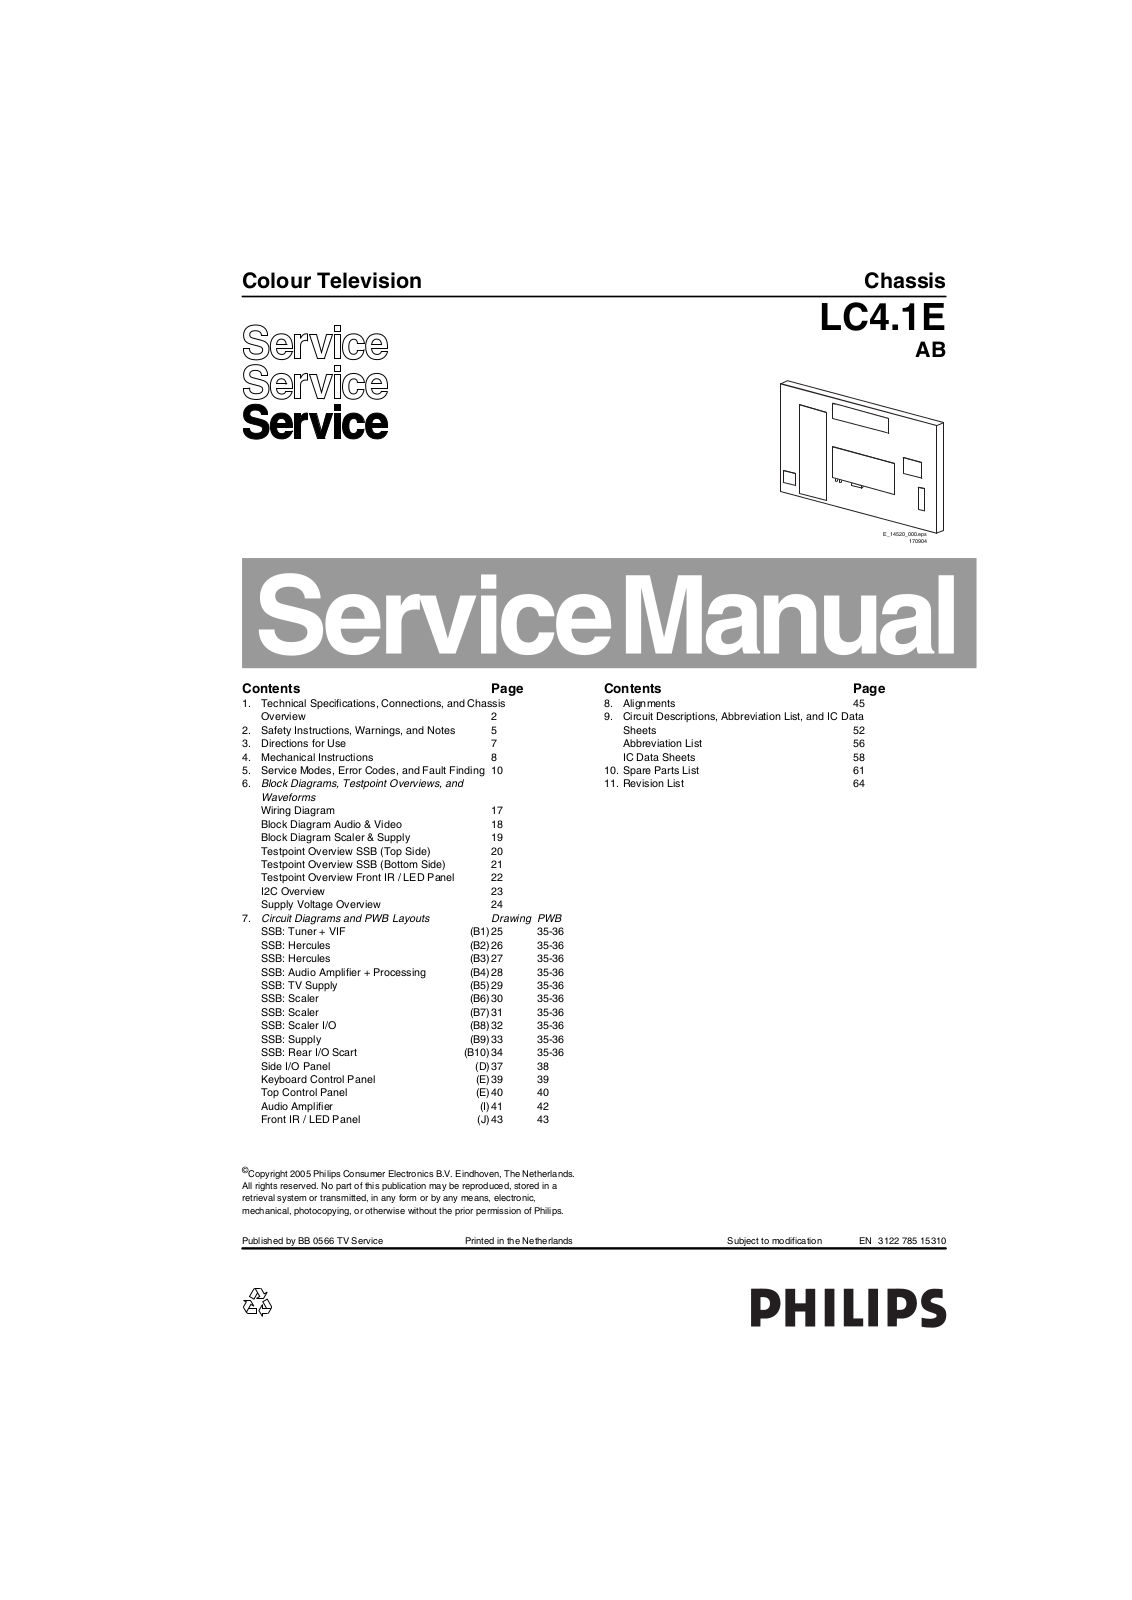 Philips LC4.1E-AB Service manual